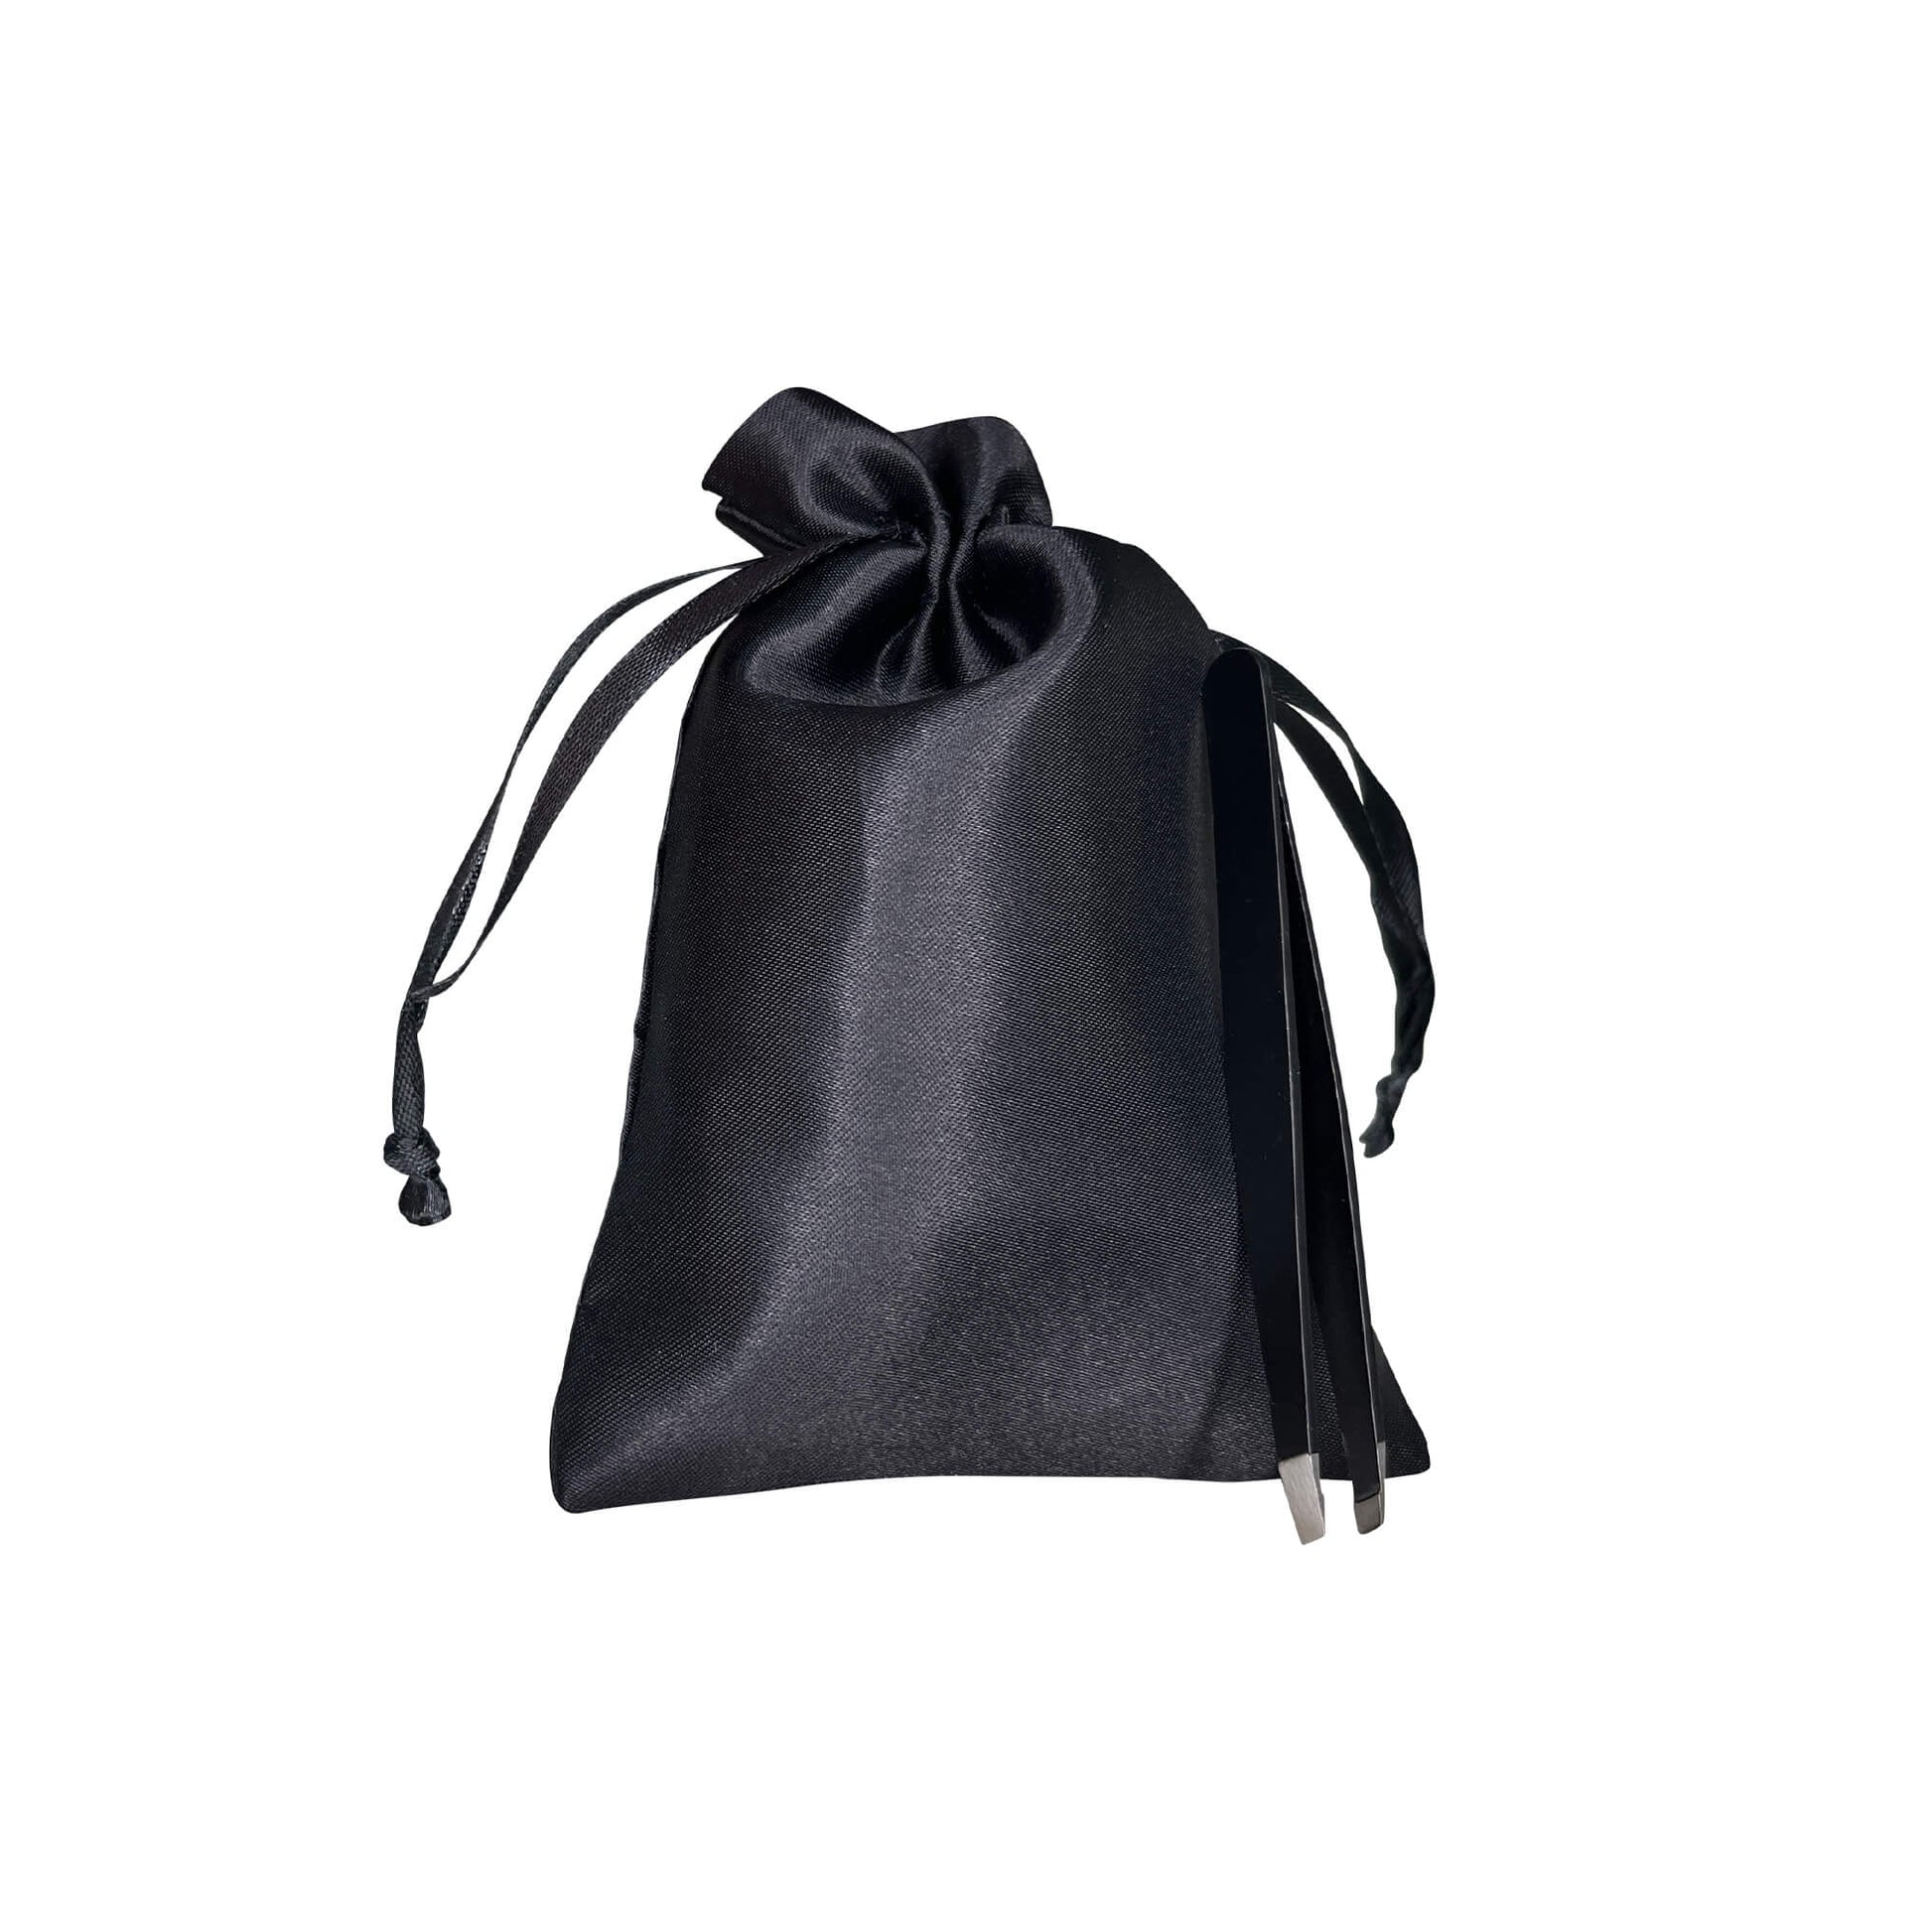 Black draw string bag with precision tweezers set